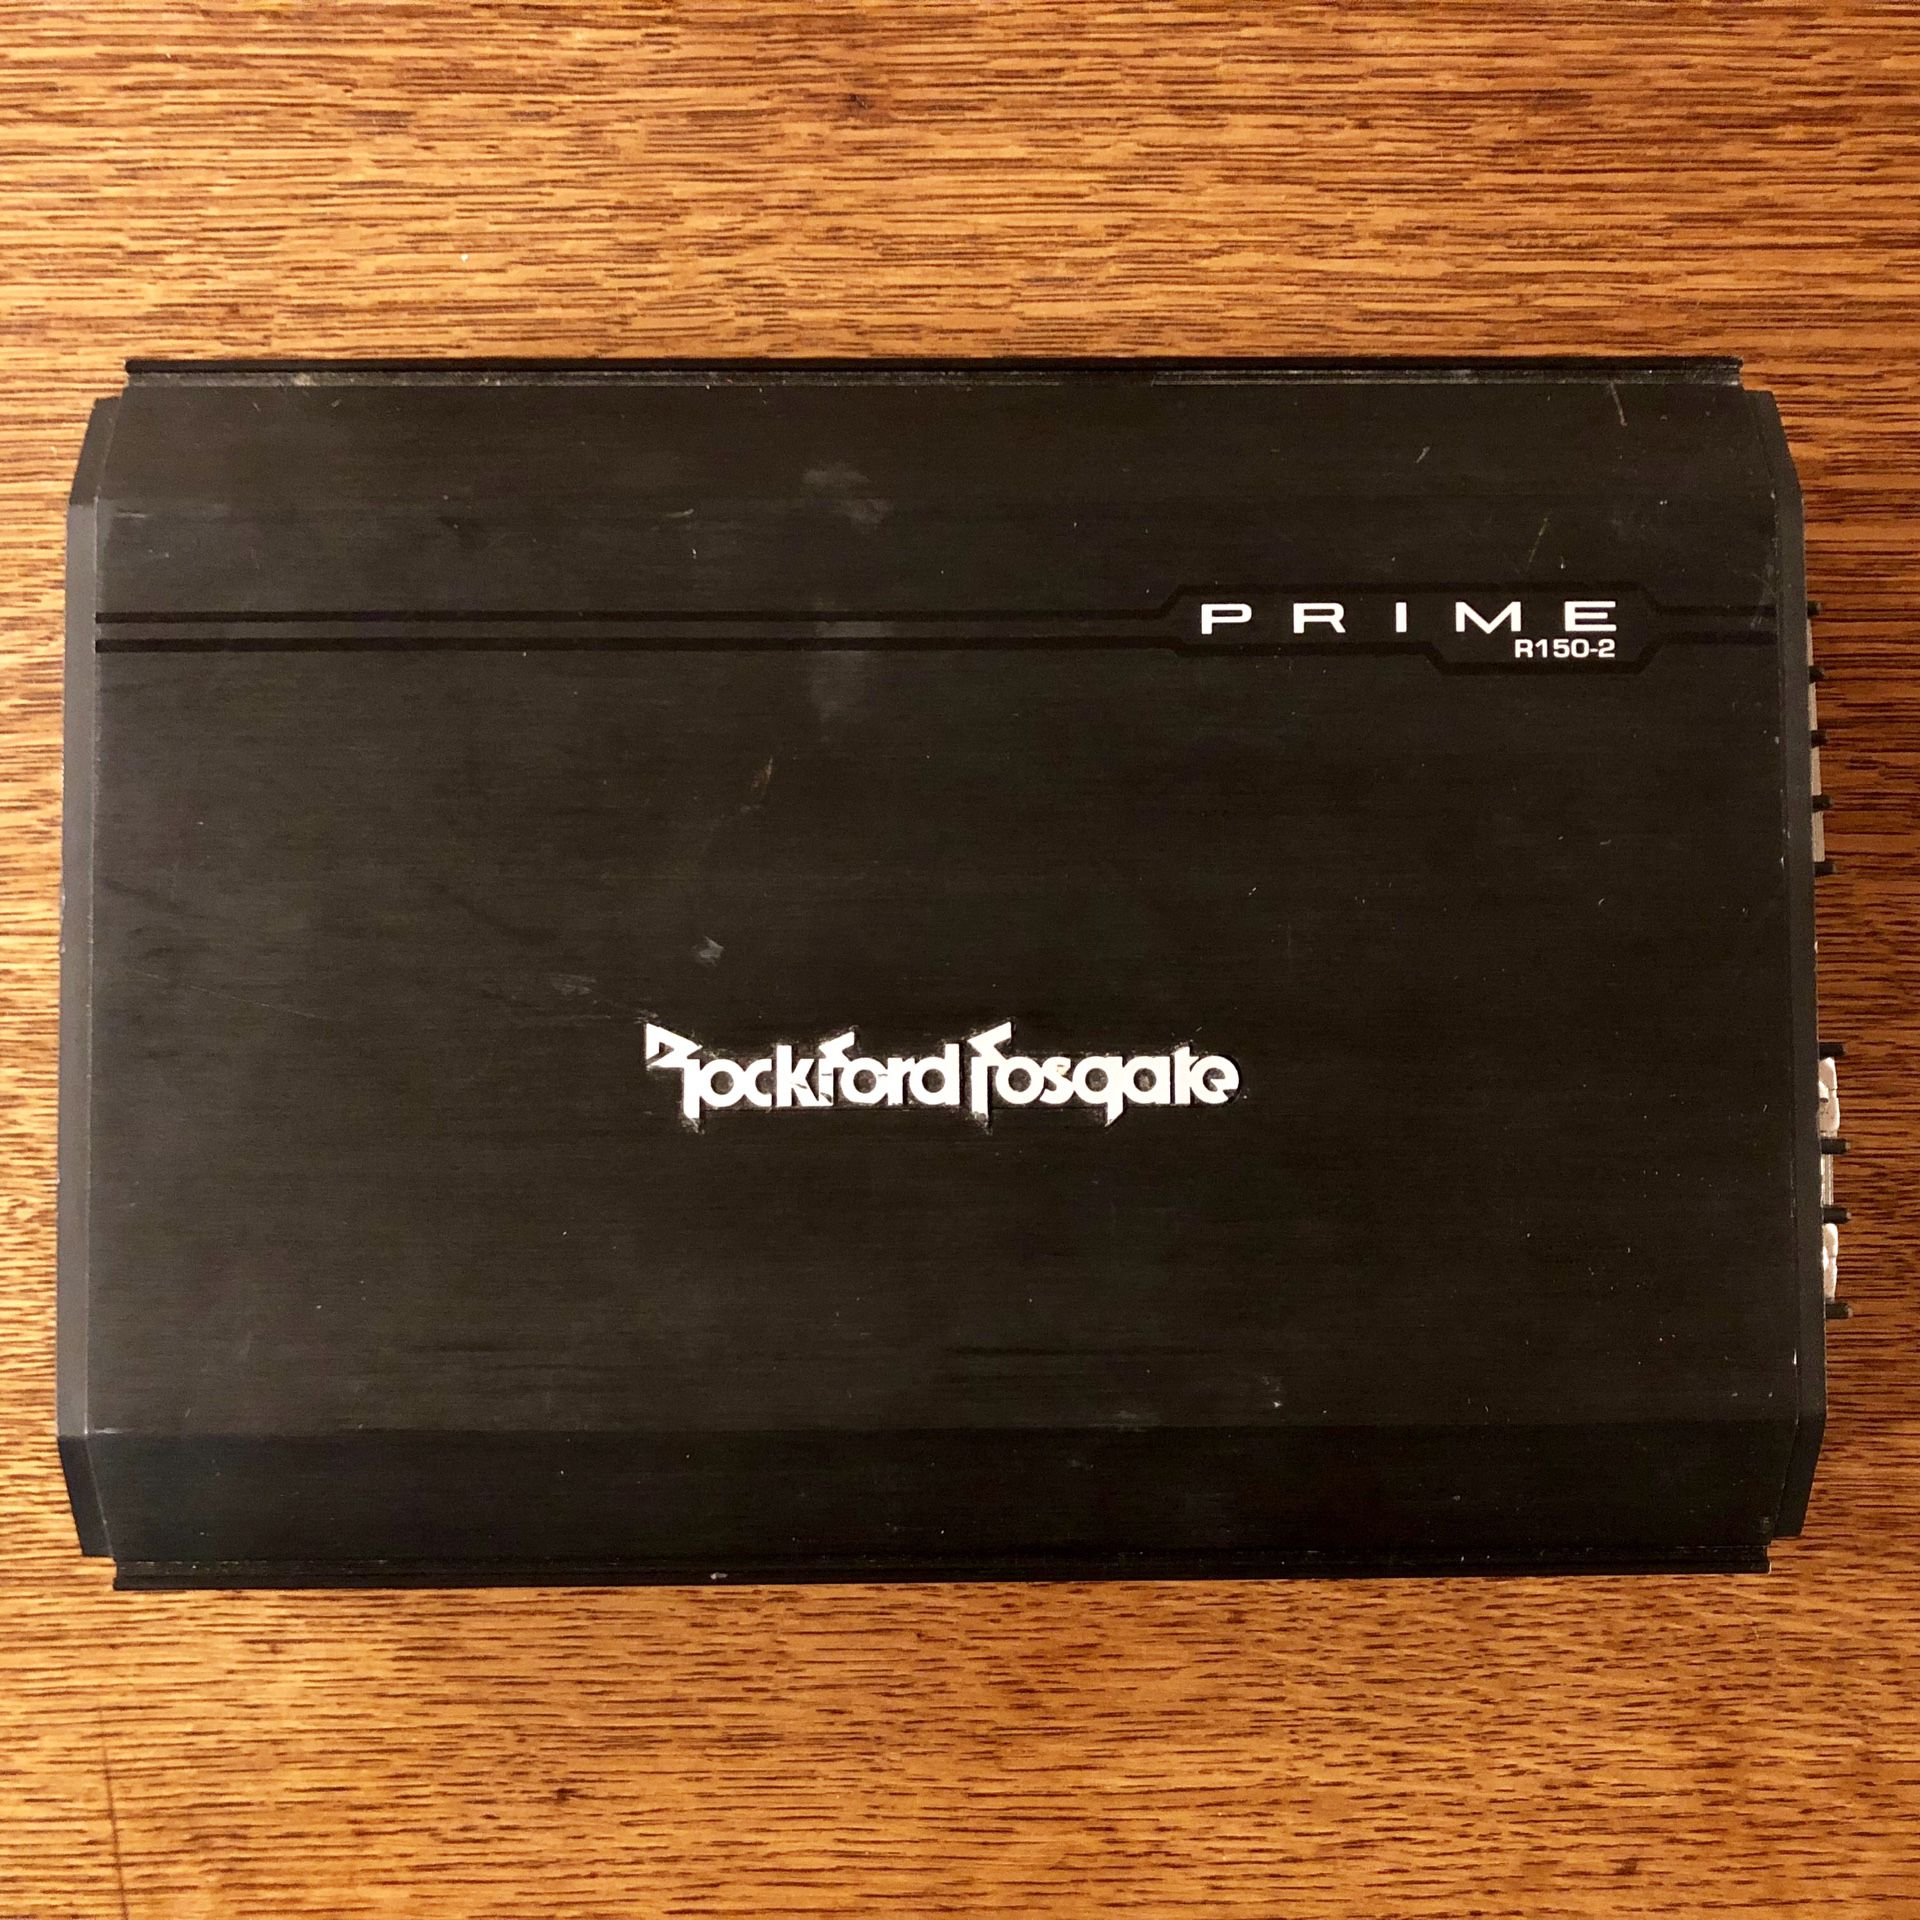 Rockford Fosgate Prime R150-2 Car Amplifier